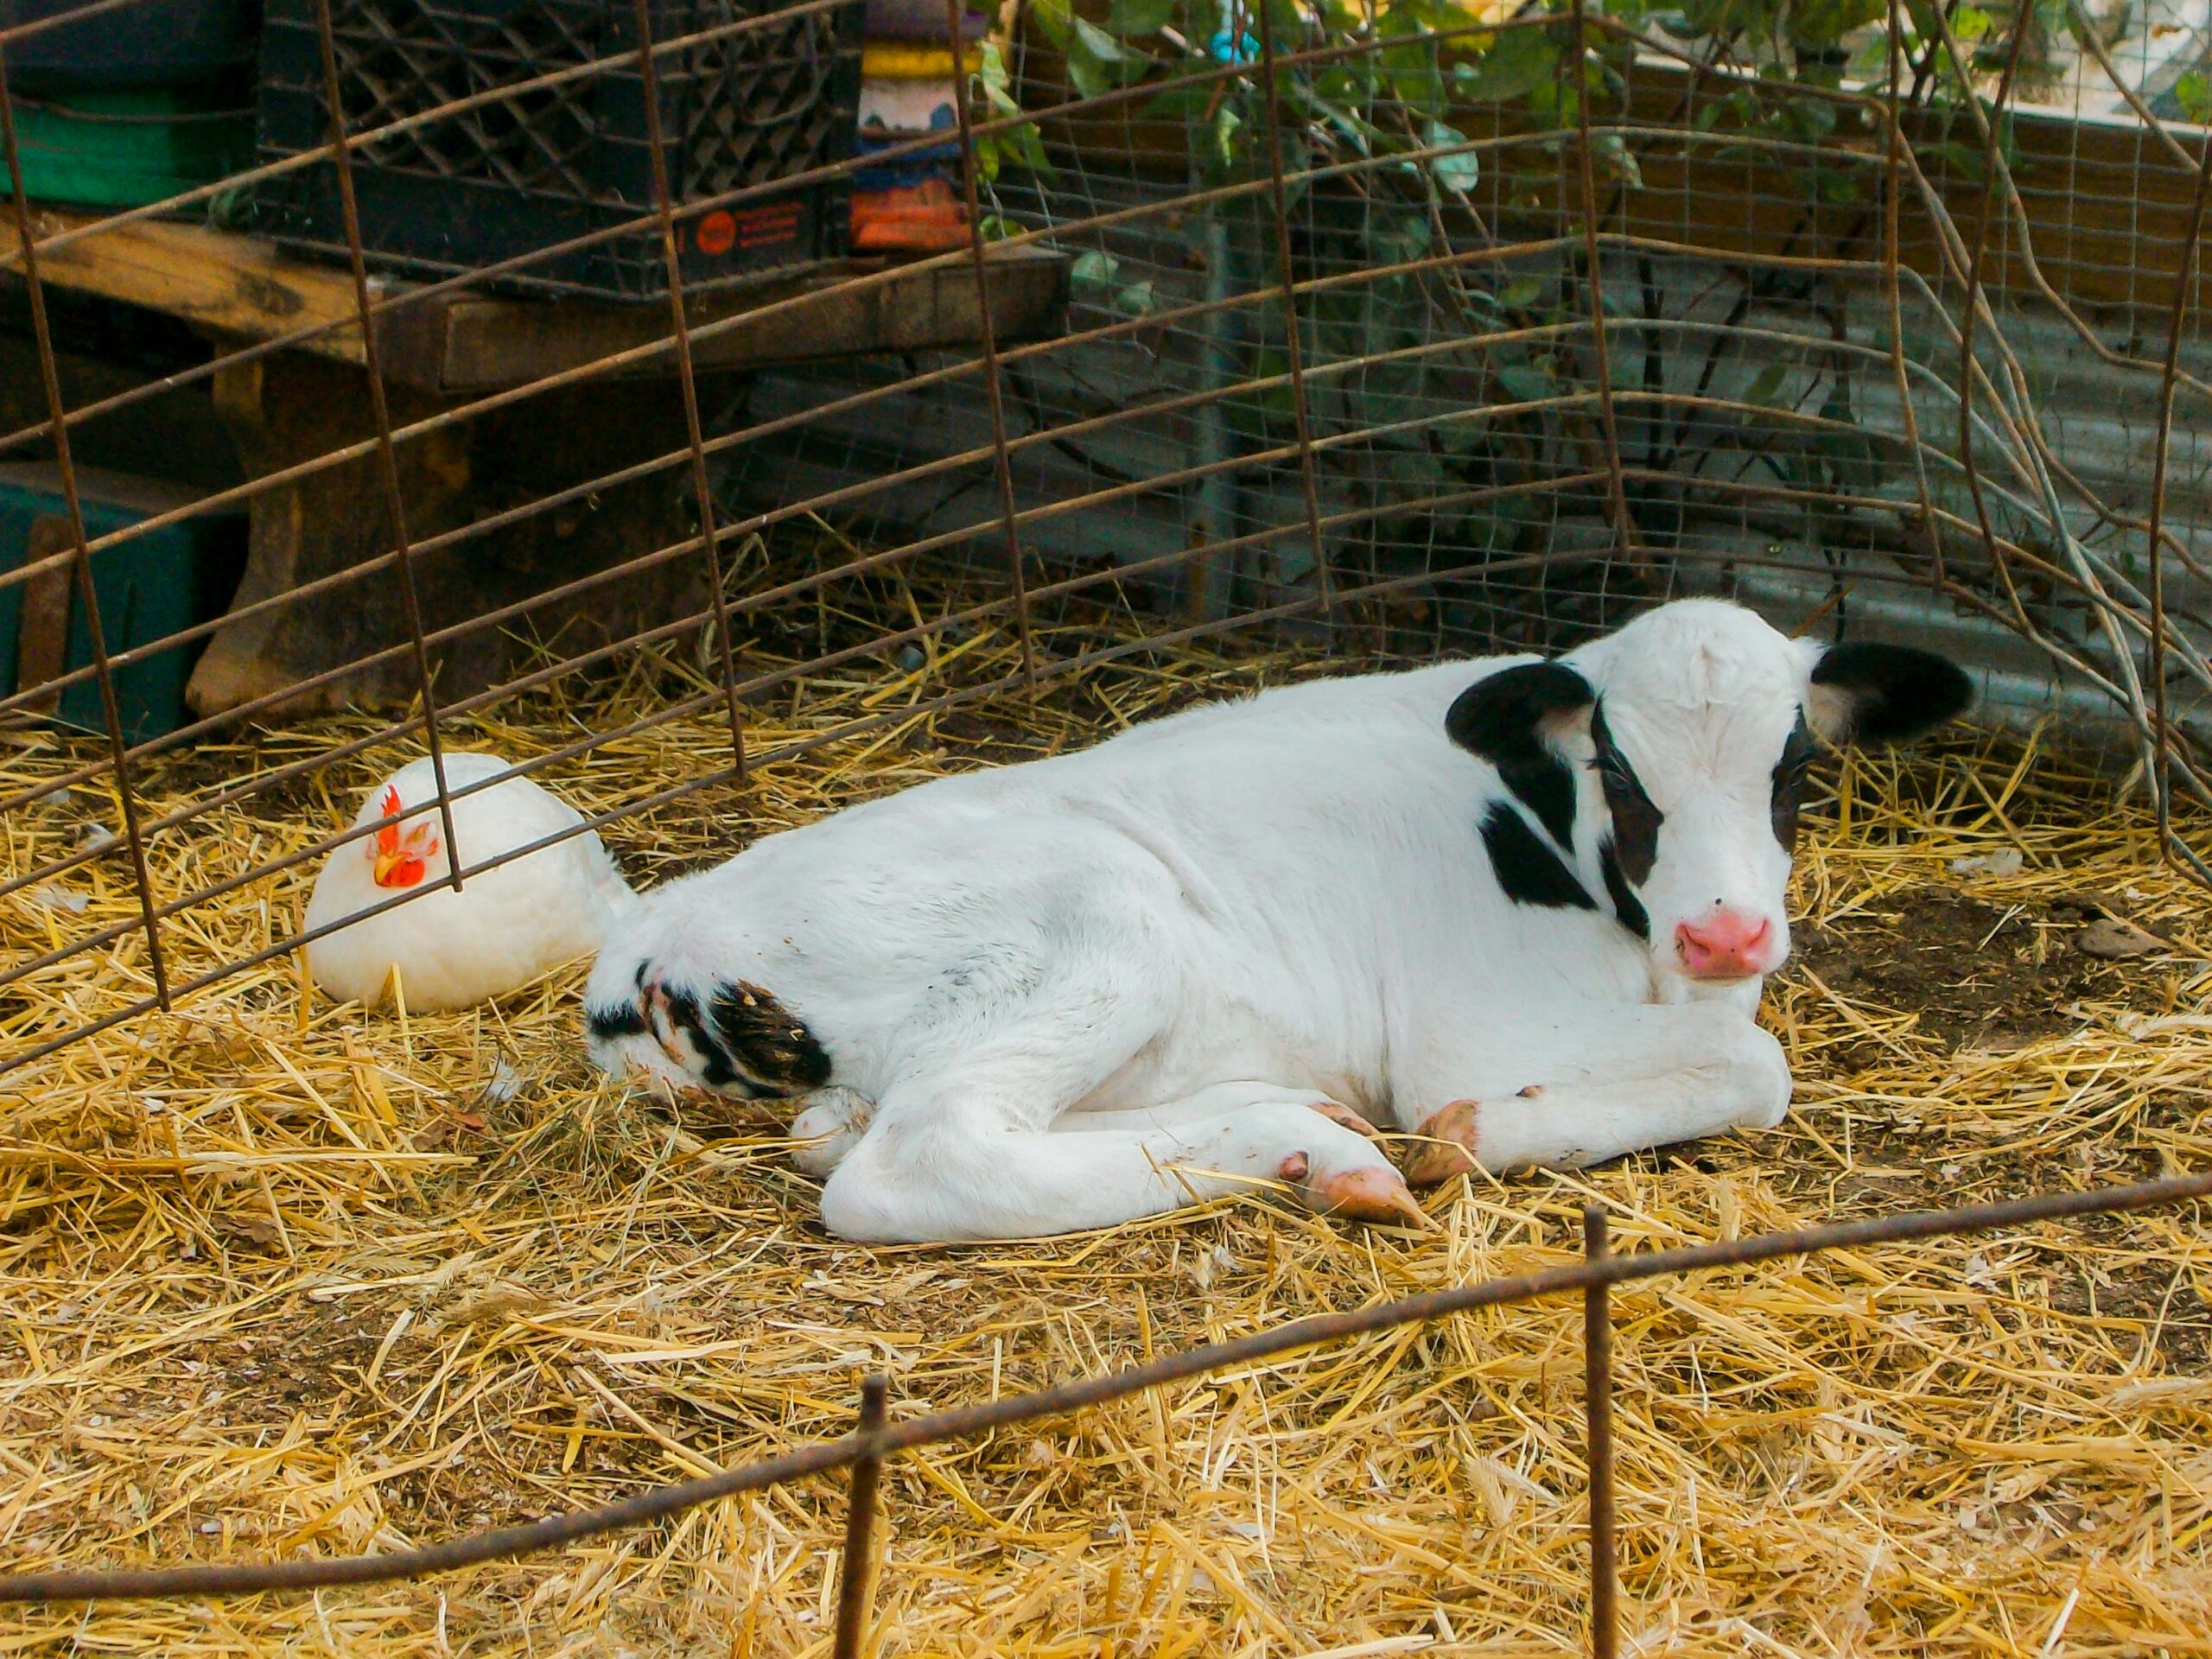 Avian influenza in US dairy cows – Expert Reaction